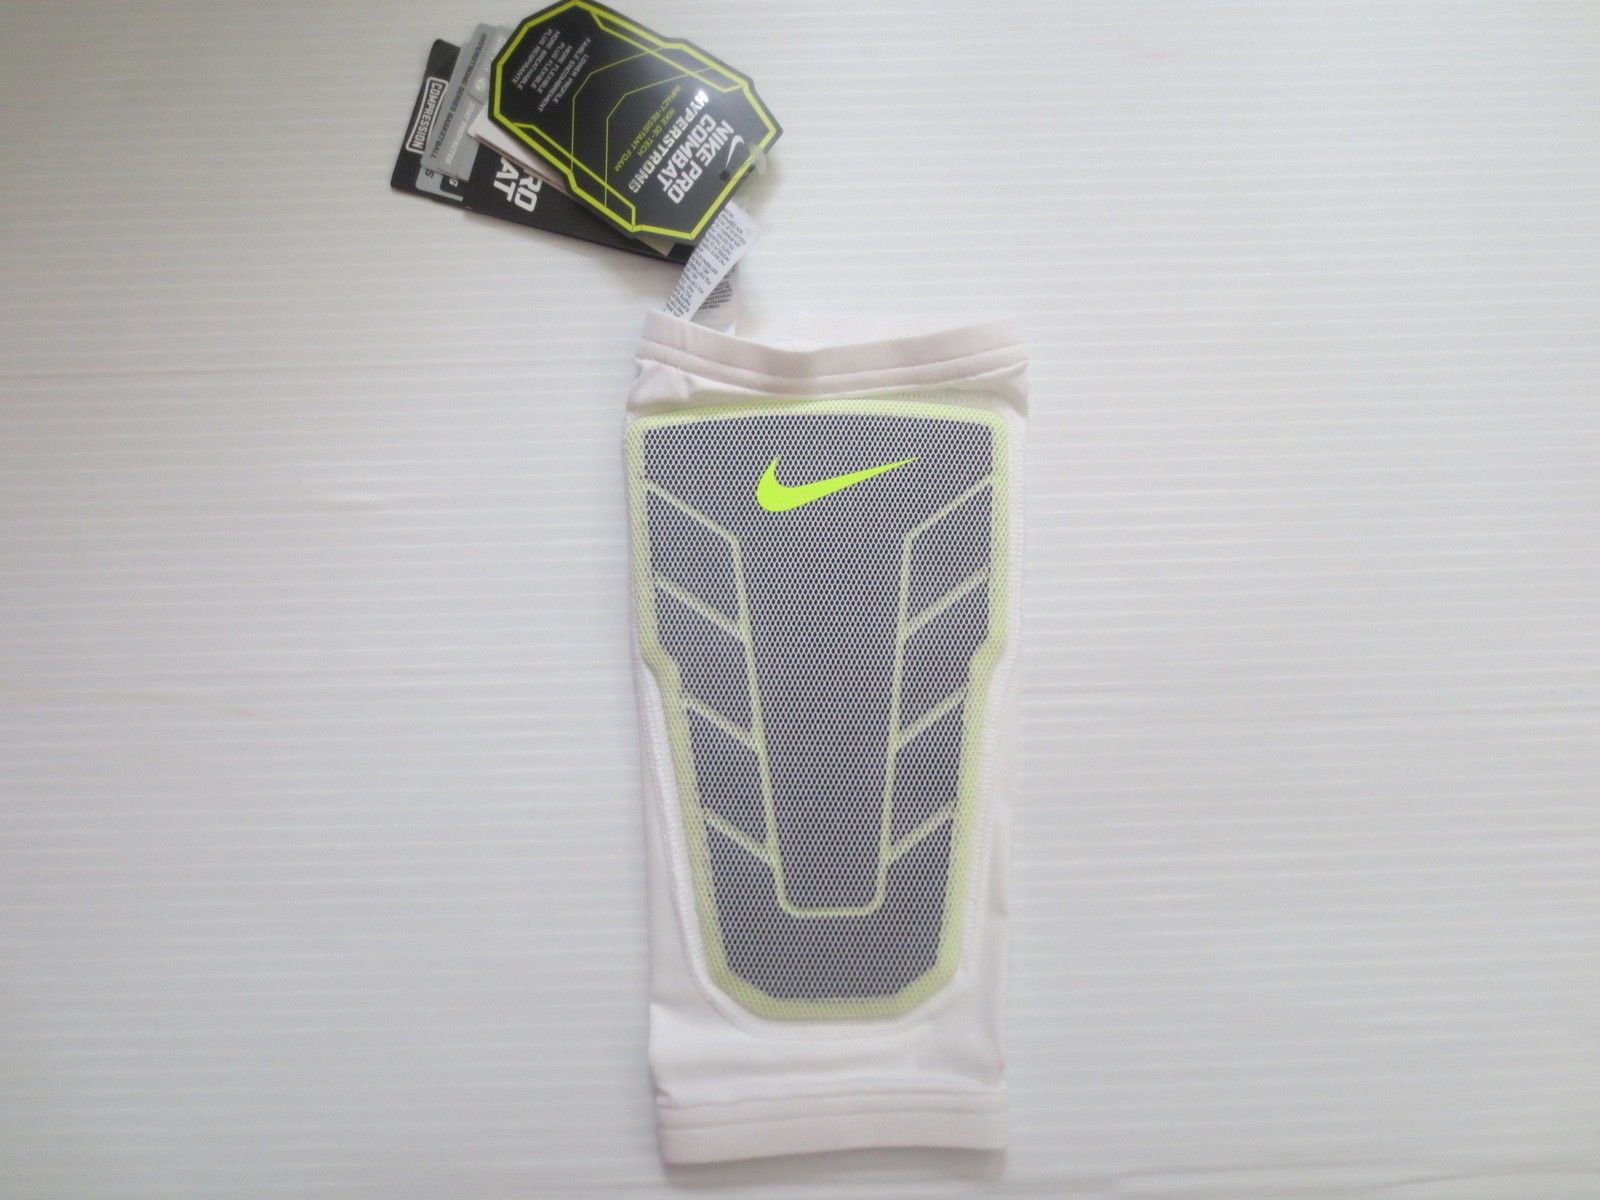  Nike Hyperstrong Padded Shin Sleeves Black/White Size